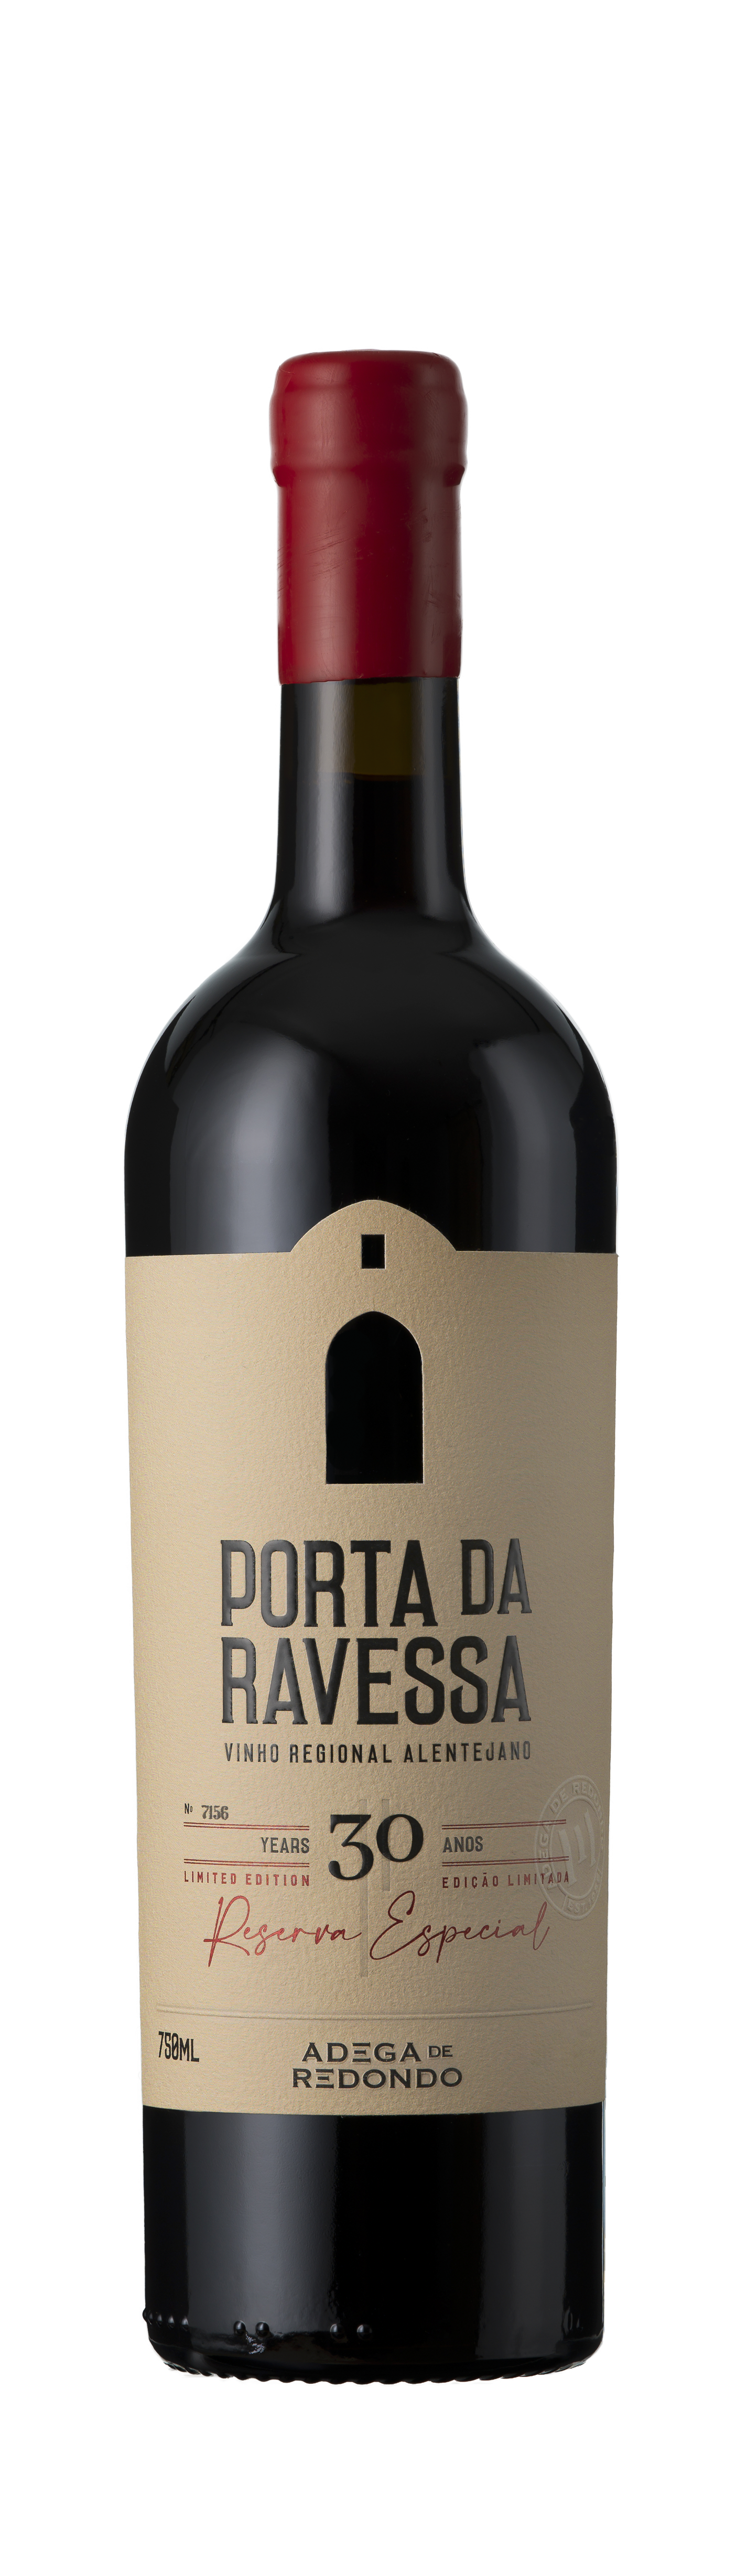 Adega de Redondo, Porta da Ravessa IGP Alentejo, Wine Portugal, especial Alliance - 2017 (30yr), Tinto Reserva